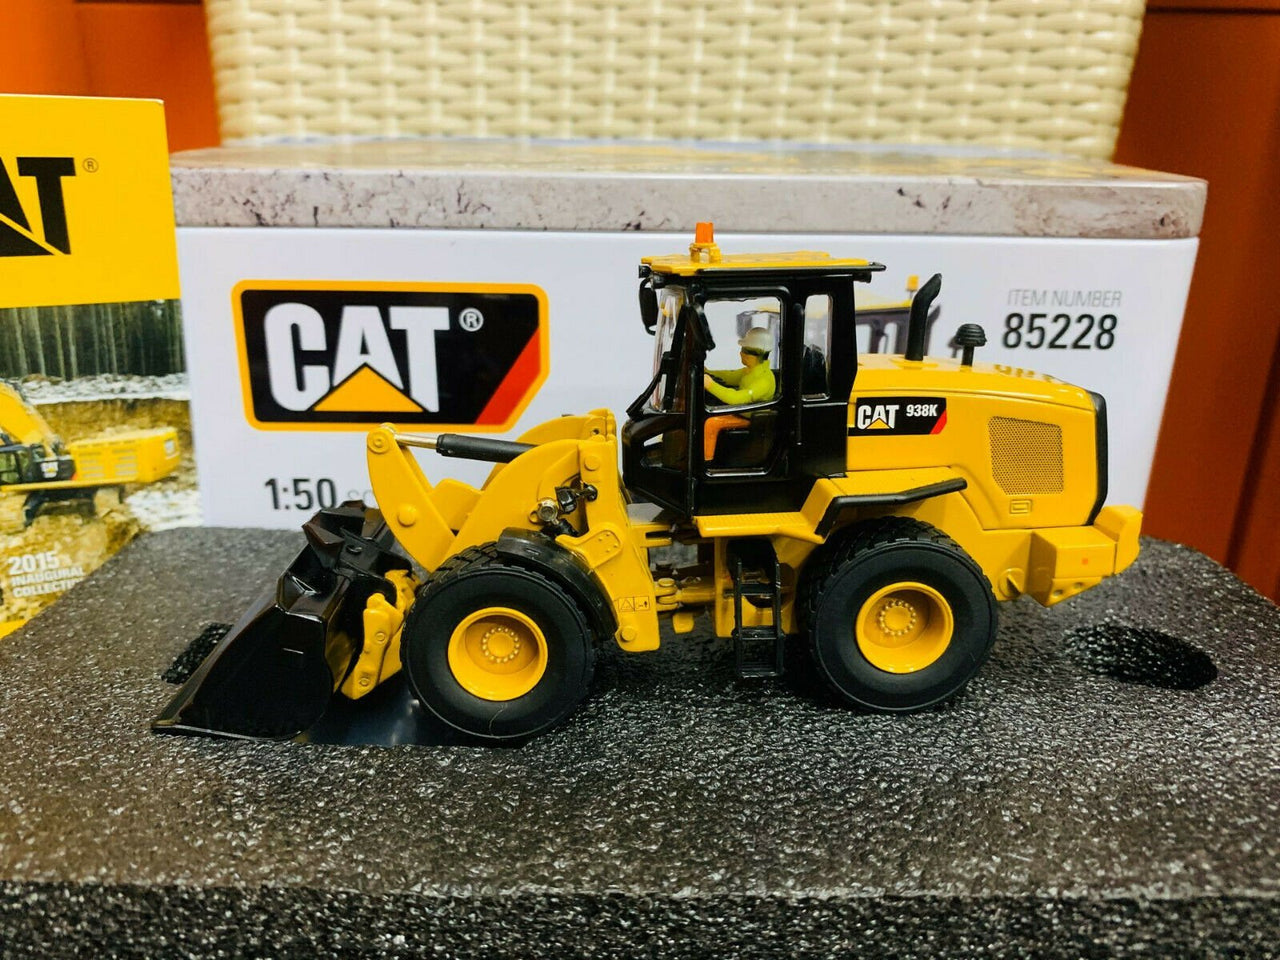 85228 Caterpillar 938K Wheel Loader 1:50 Scale (Discontinued Model)